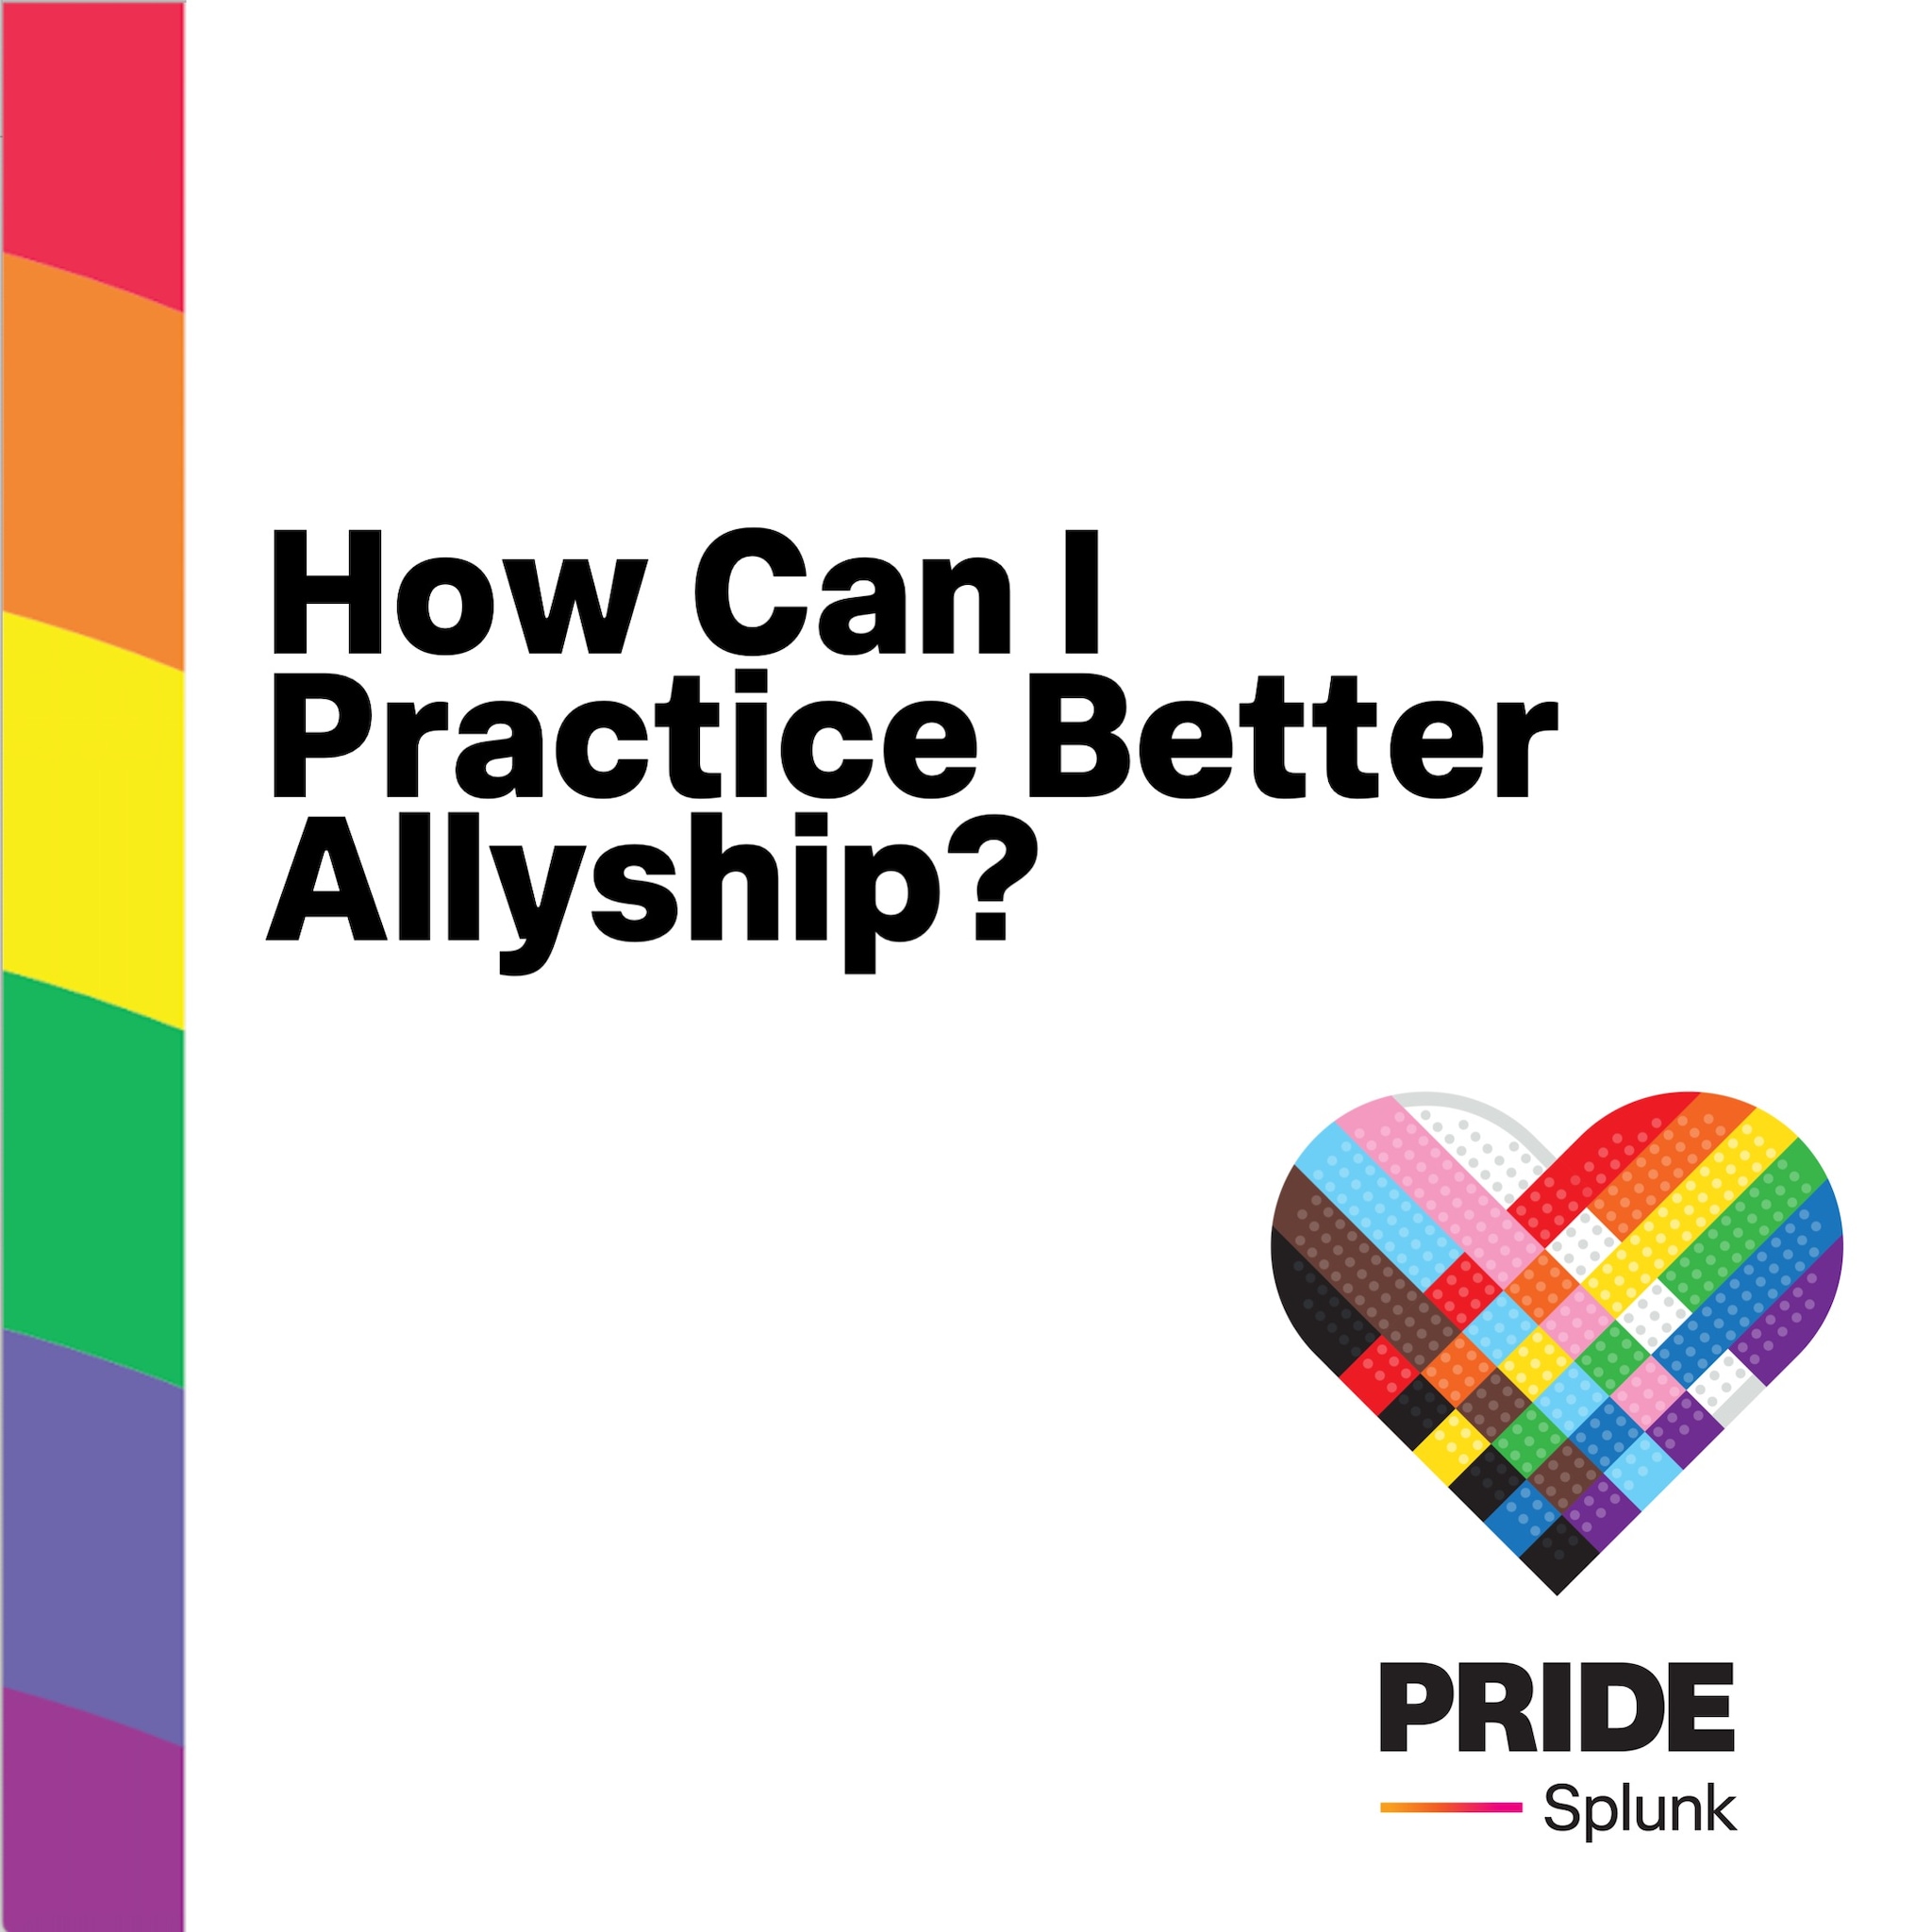 How to practice better Allyship